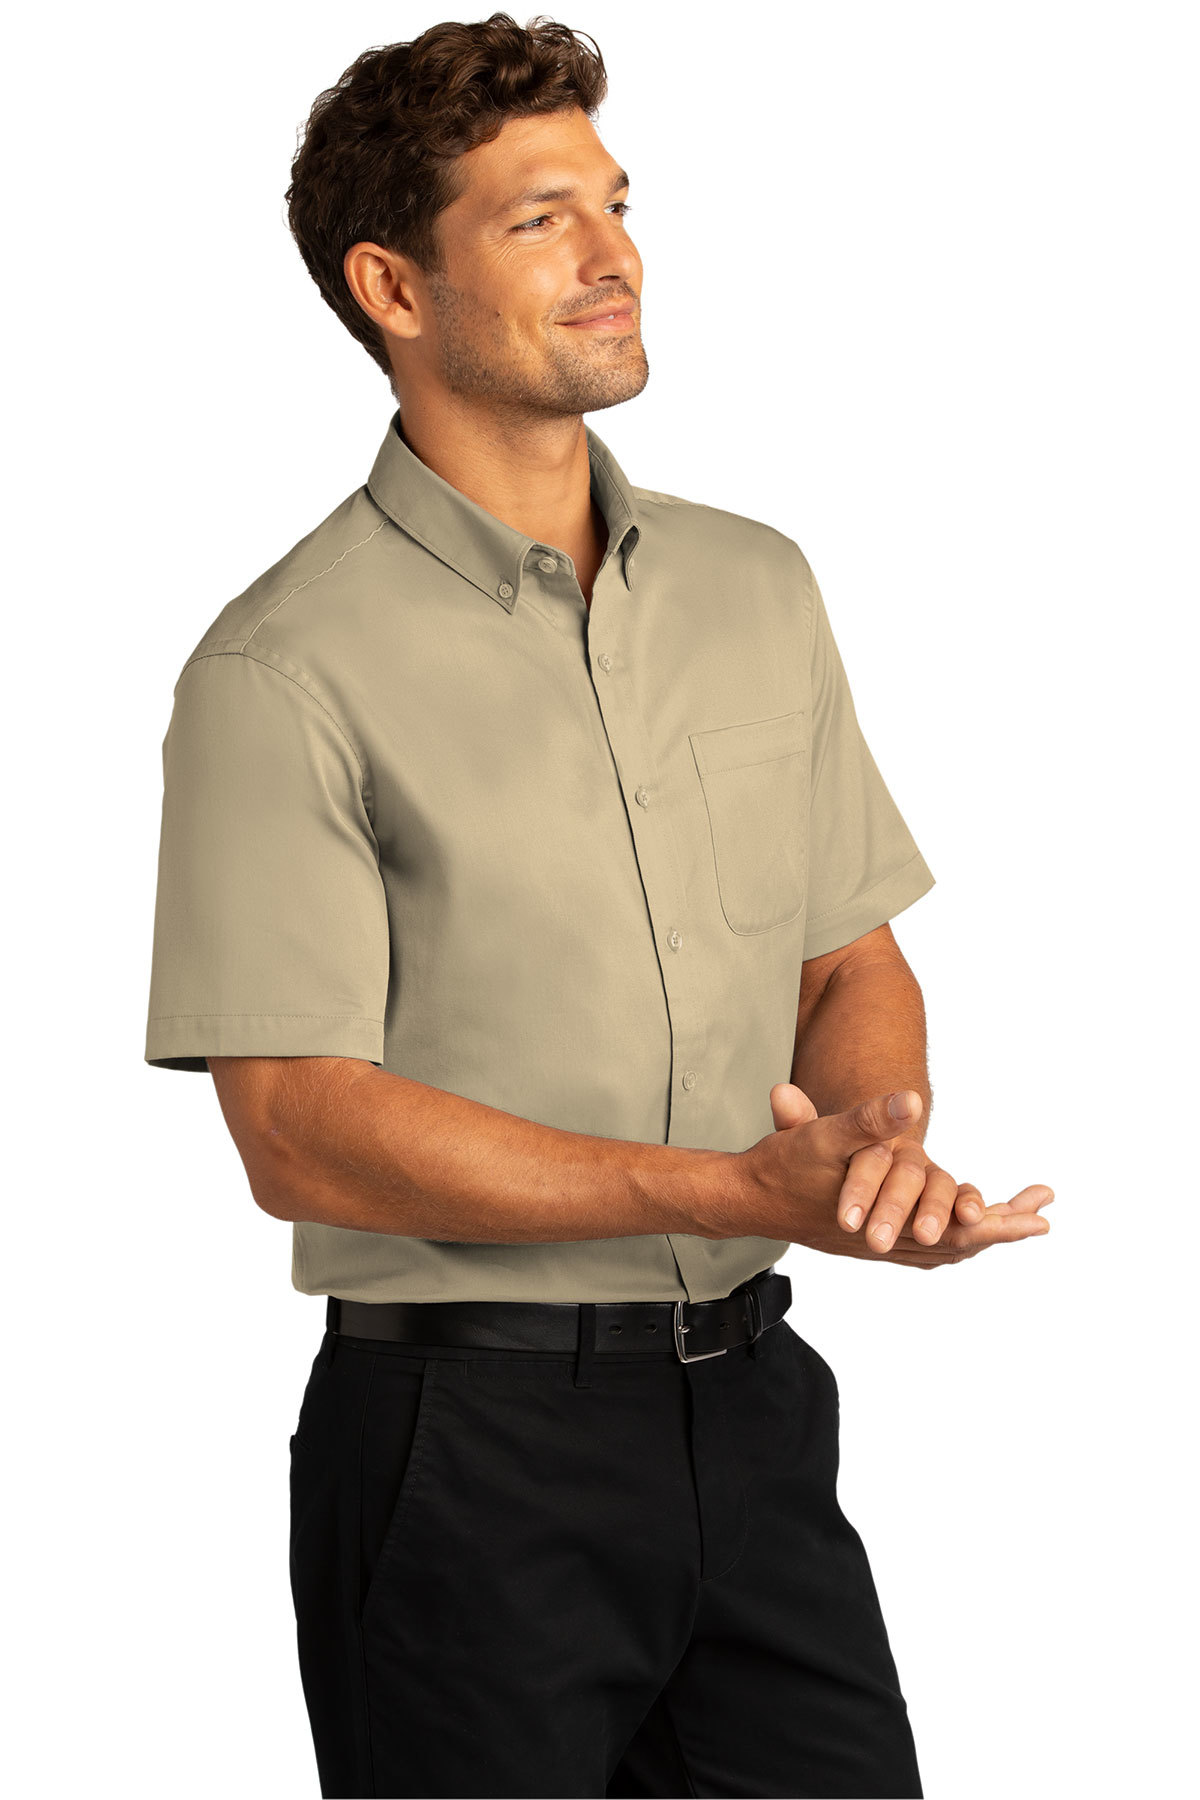 Port Authority Short Sleeve SuperPro ReactTwill Shirt | Product | Port ...